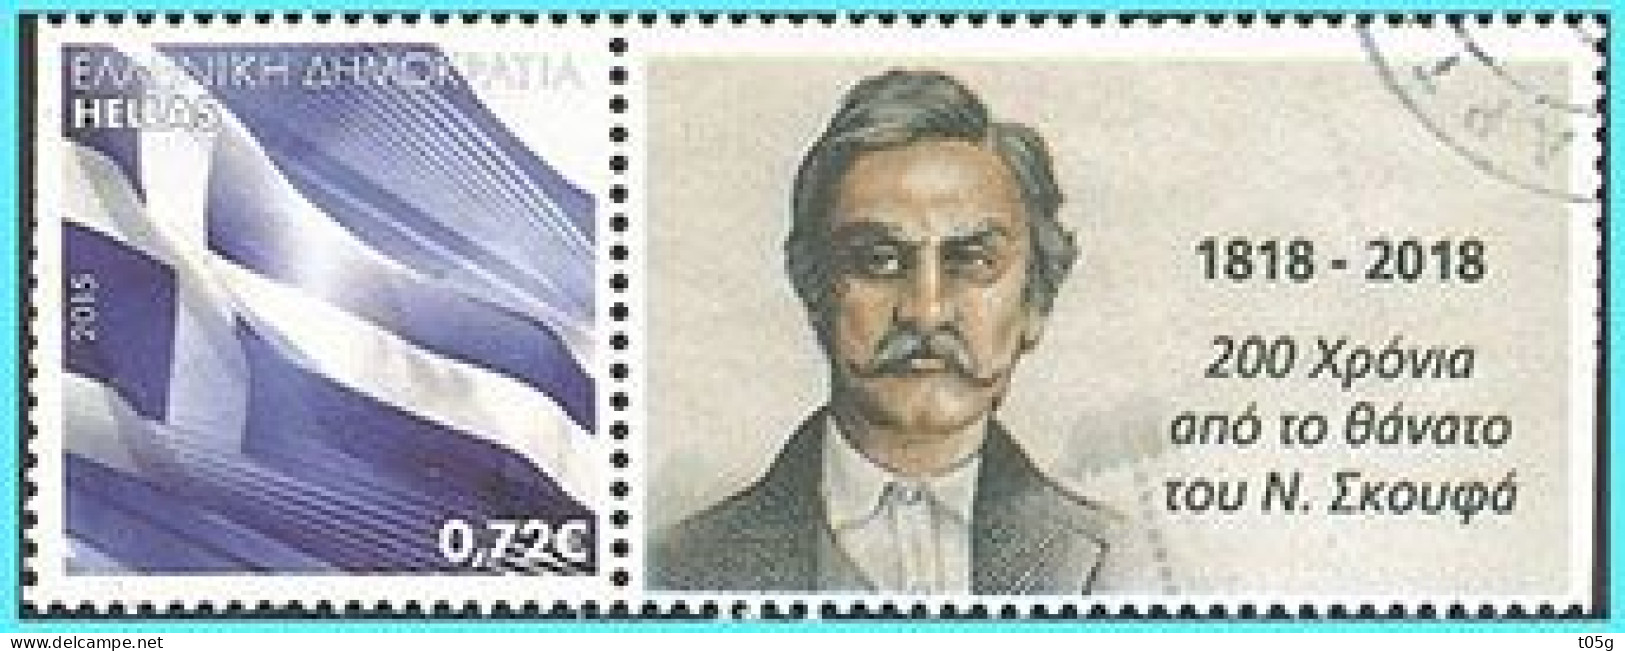 GREECE- GRECE- HELLAS- EPIRUS  2020: Personalised Stamps For τον  Ν. ΣΚΟΥΦΑ  ιδρυτή της ΦΙΛΙΚΗΣ ΕΤΑΙΡΕΙΑΣ  Used - Oblitérés